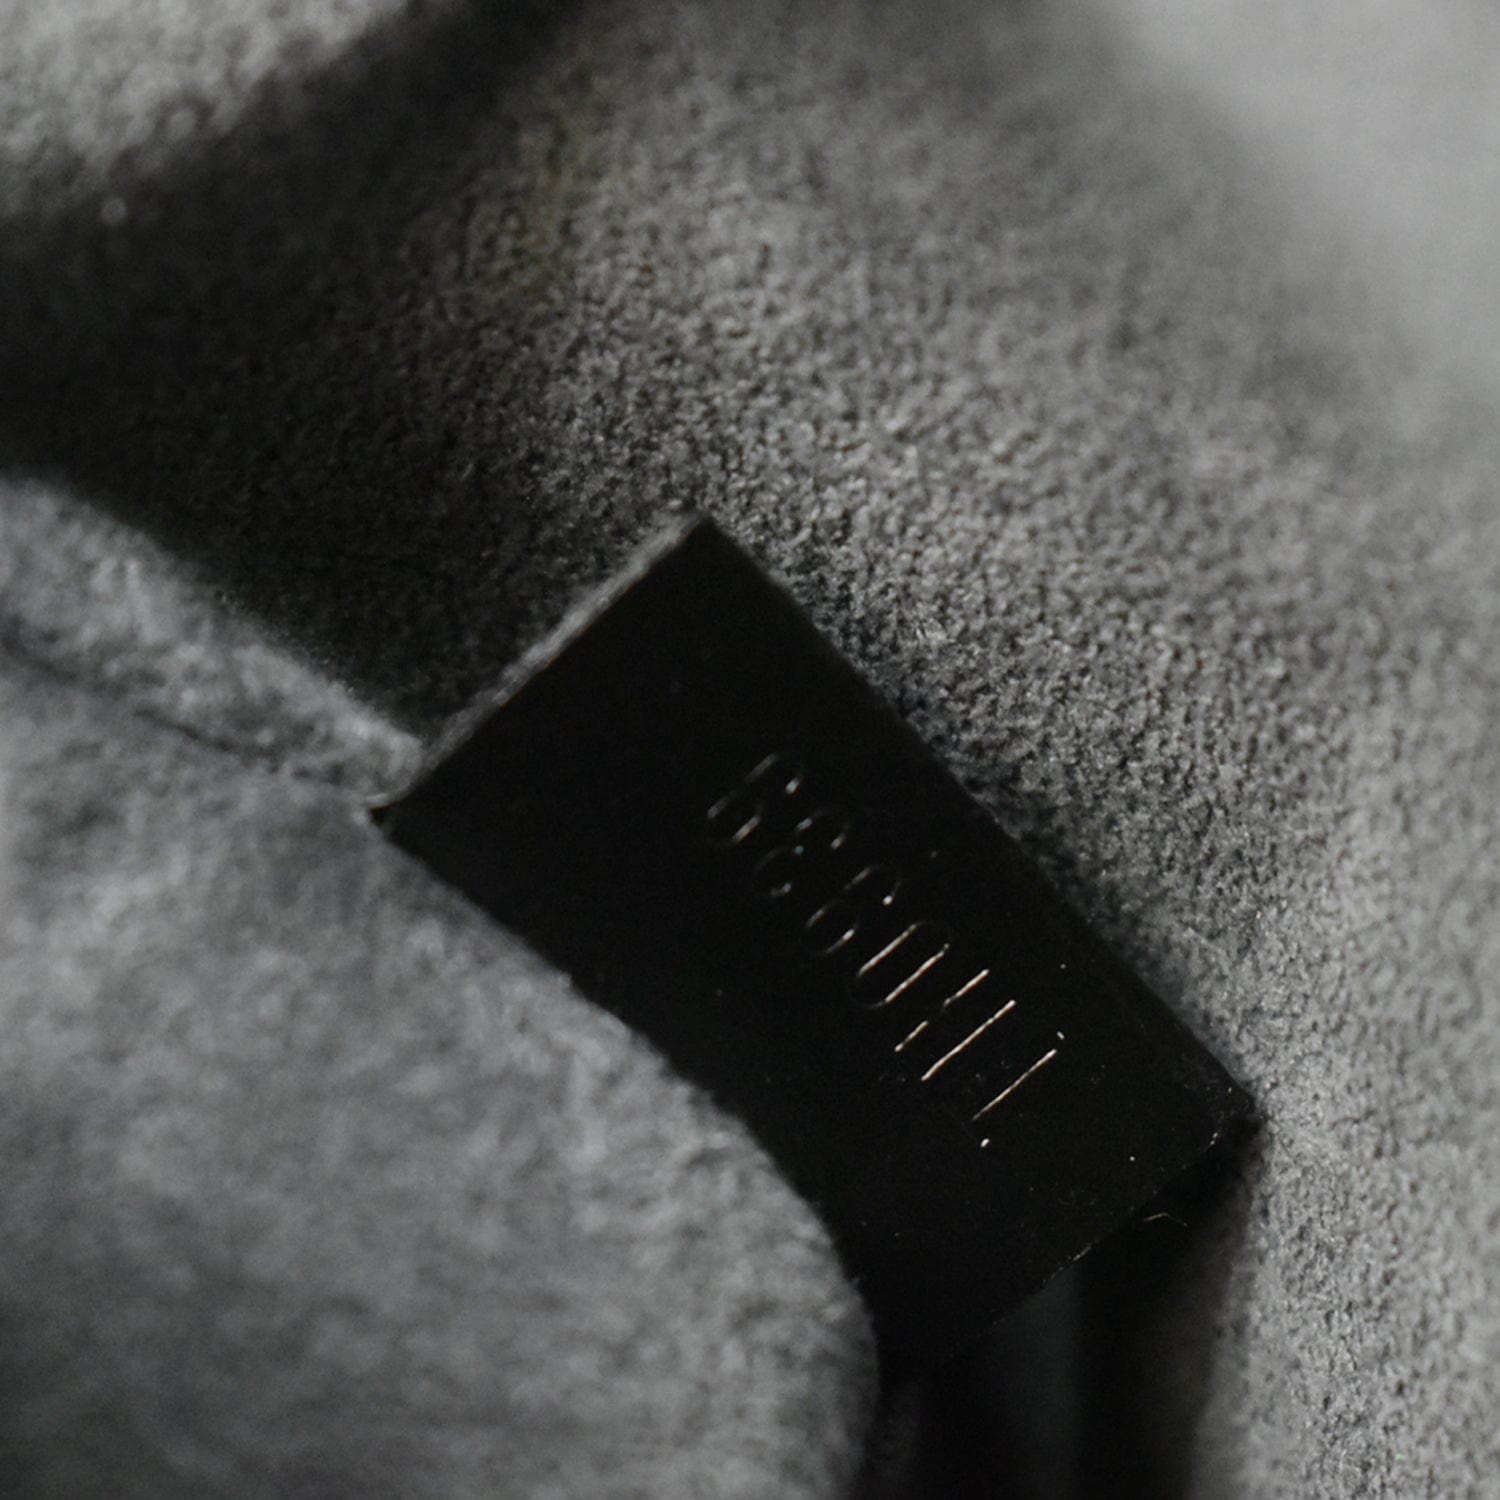 Louis Vuitton - Jasmine Epi Leather Noir